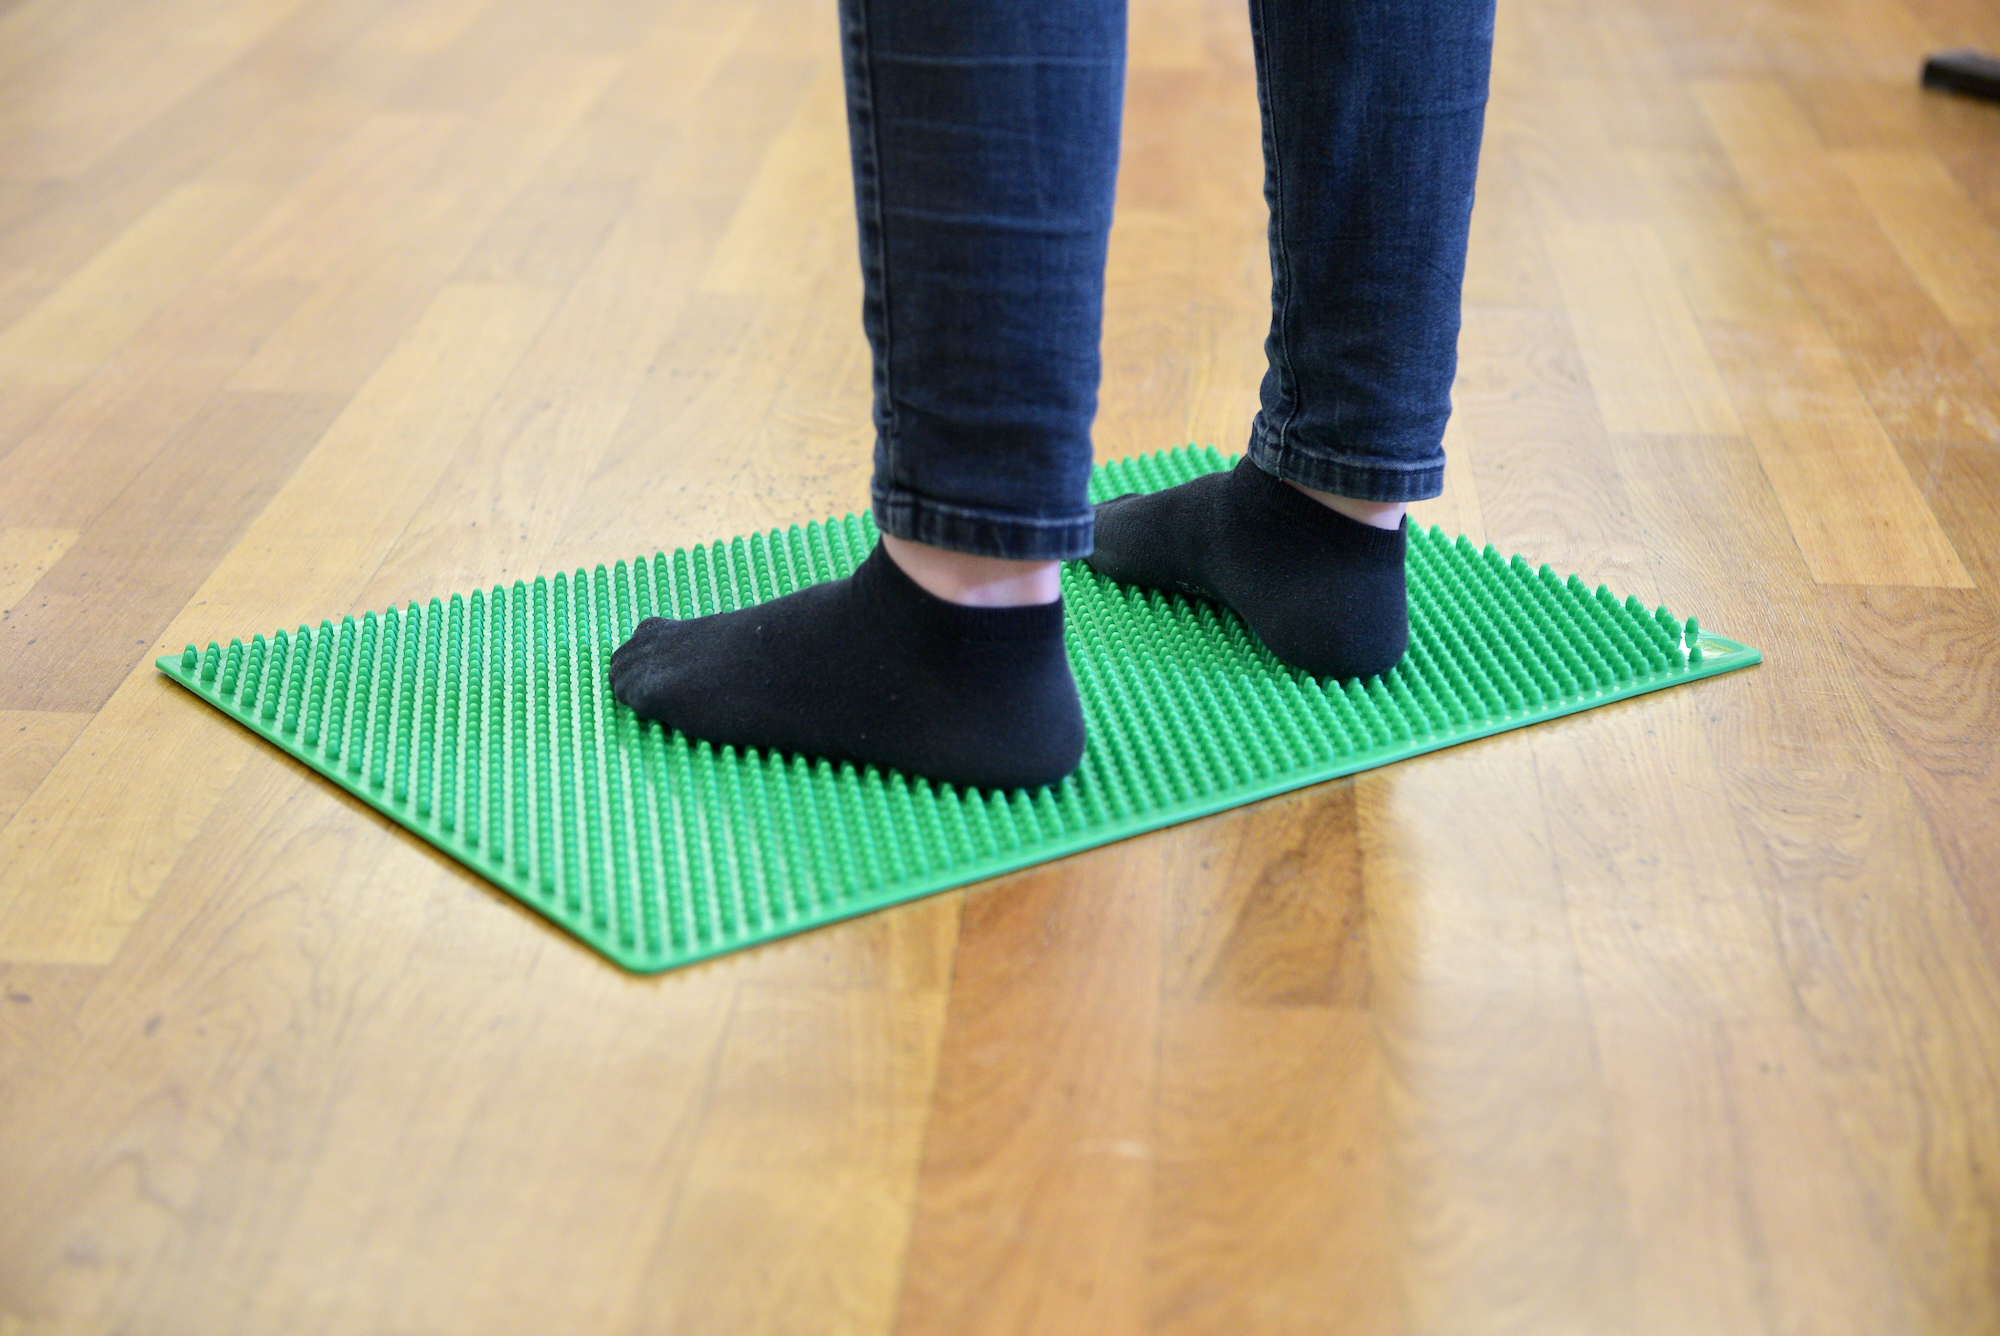 Standing on a studded rubber mat